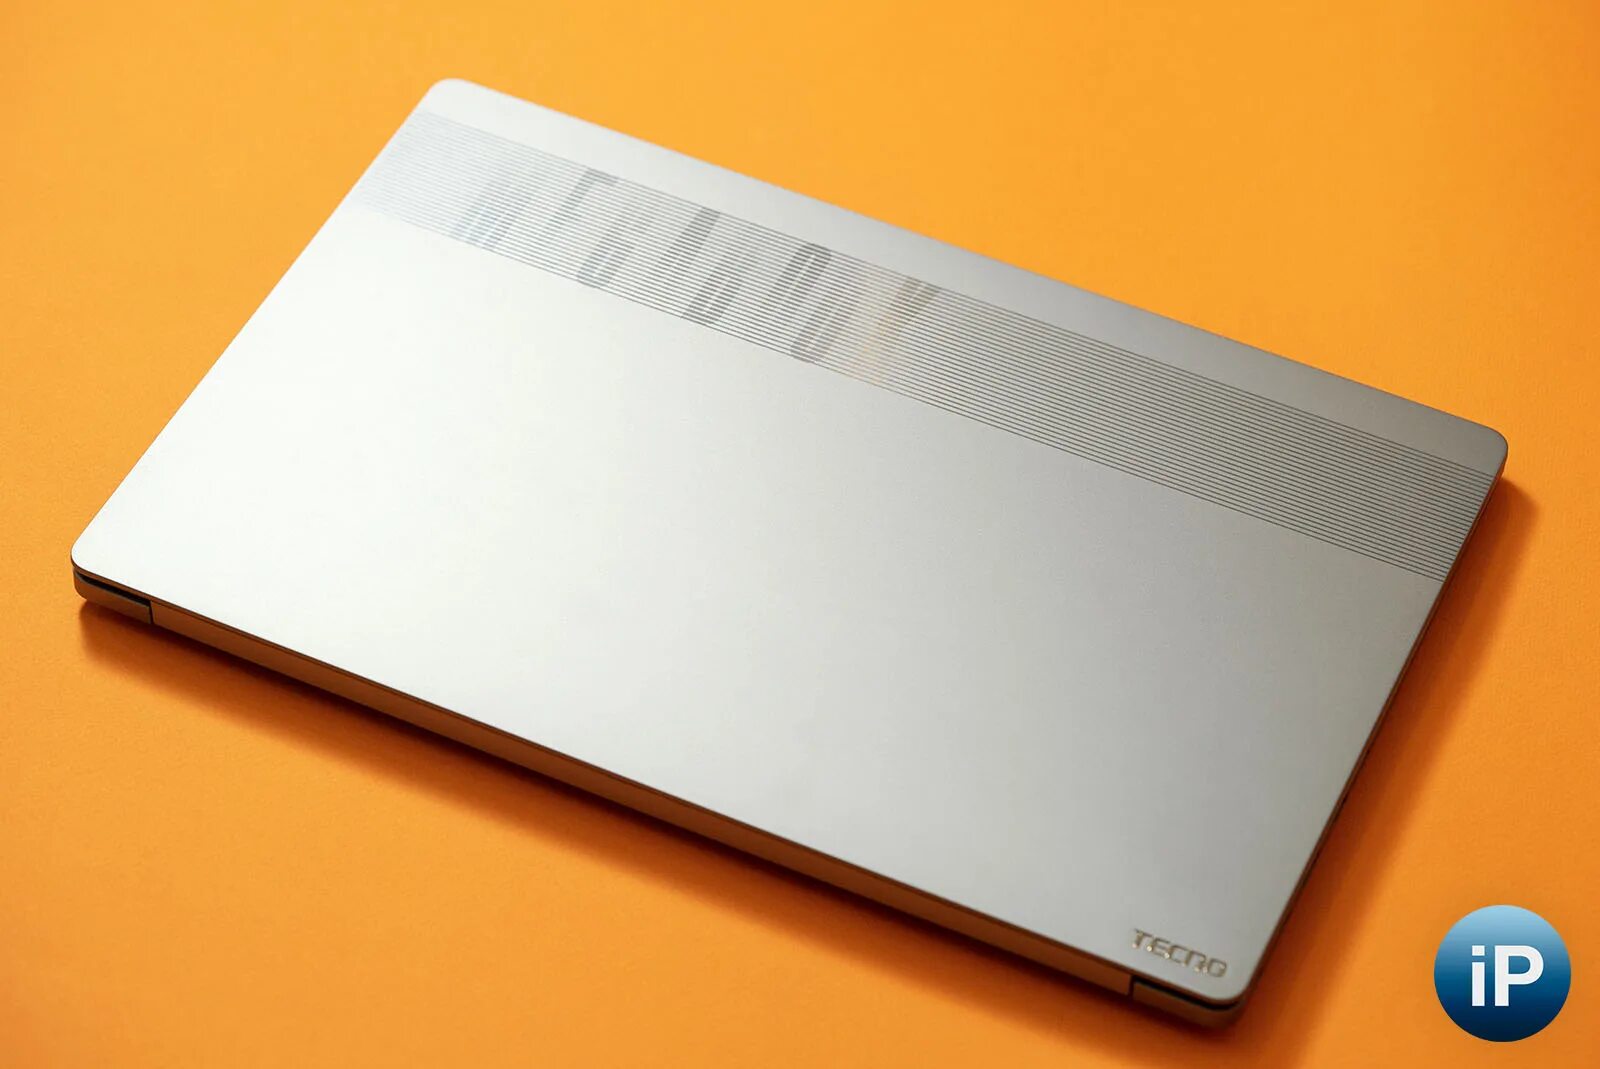 Ноутбук MEGABOOK. Techno ноутбук MEGABOOK цвета. Матрица ноутбука Techno MEGABOOK t1. Ноутбук Tecno MEGABOOK t1 синий. Tecno megabook t1 r7